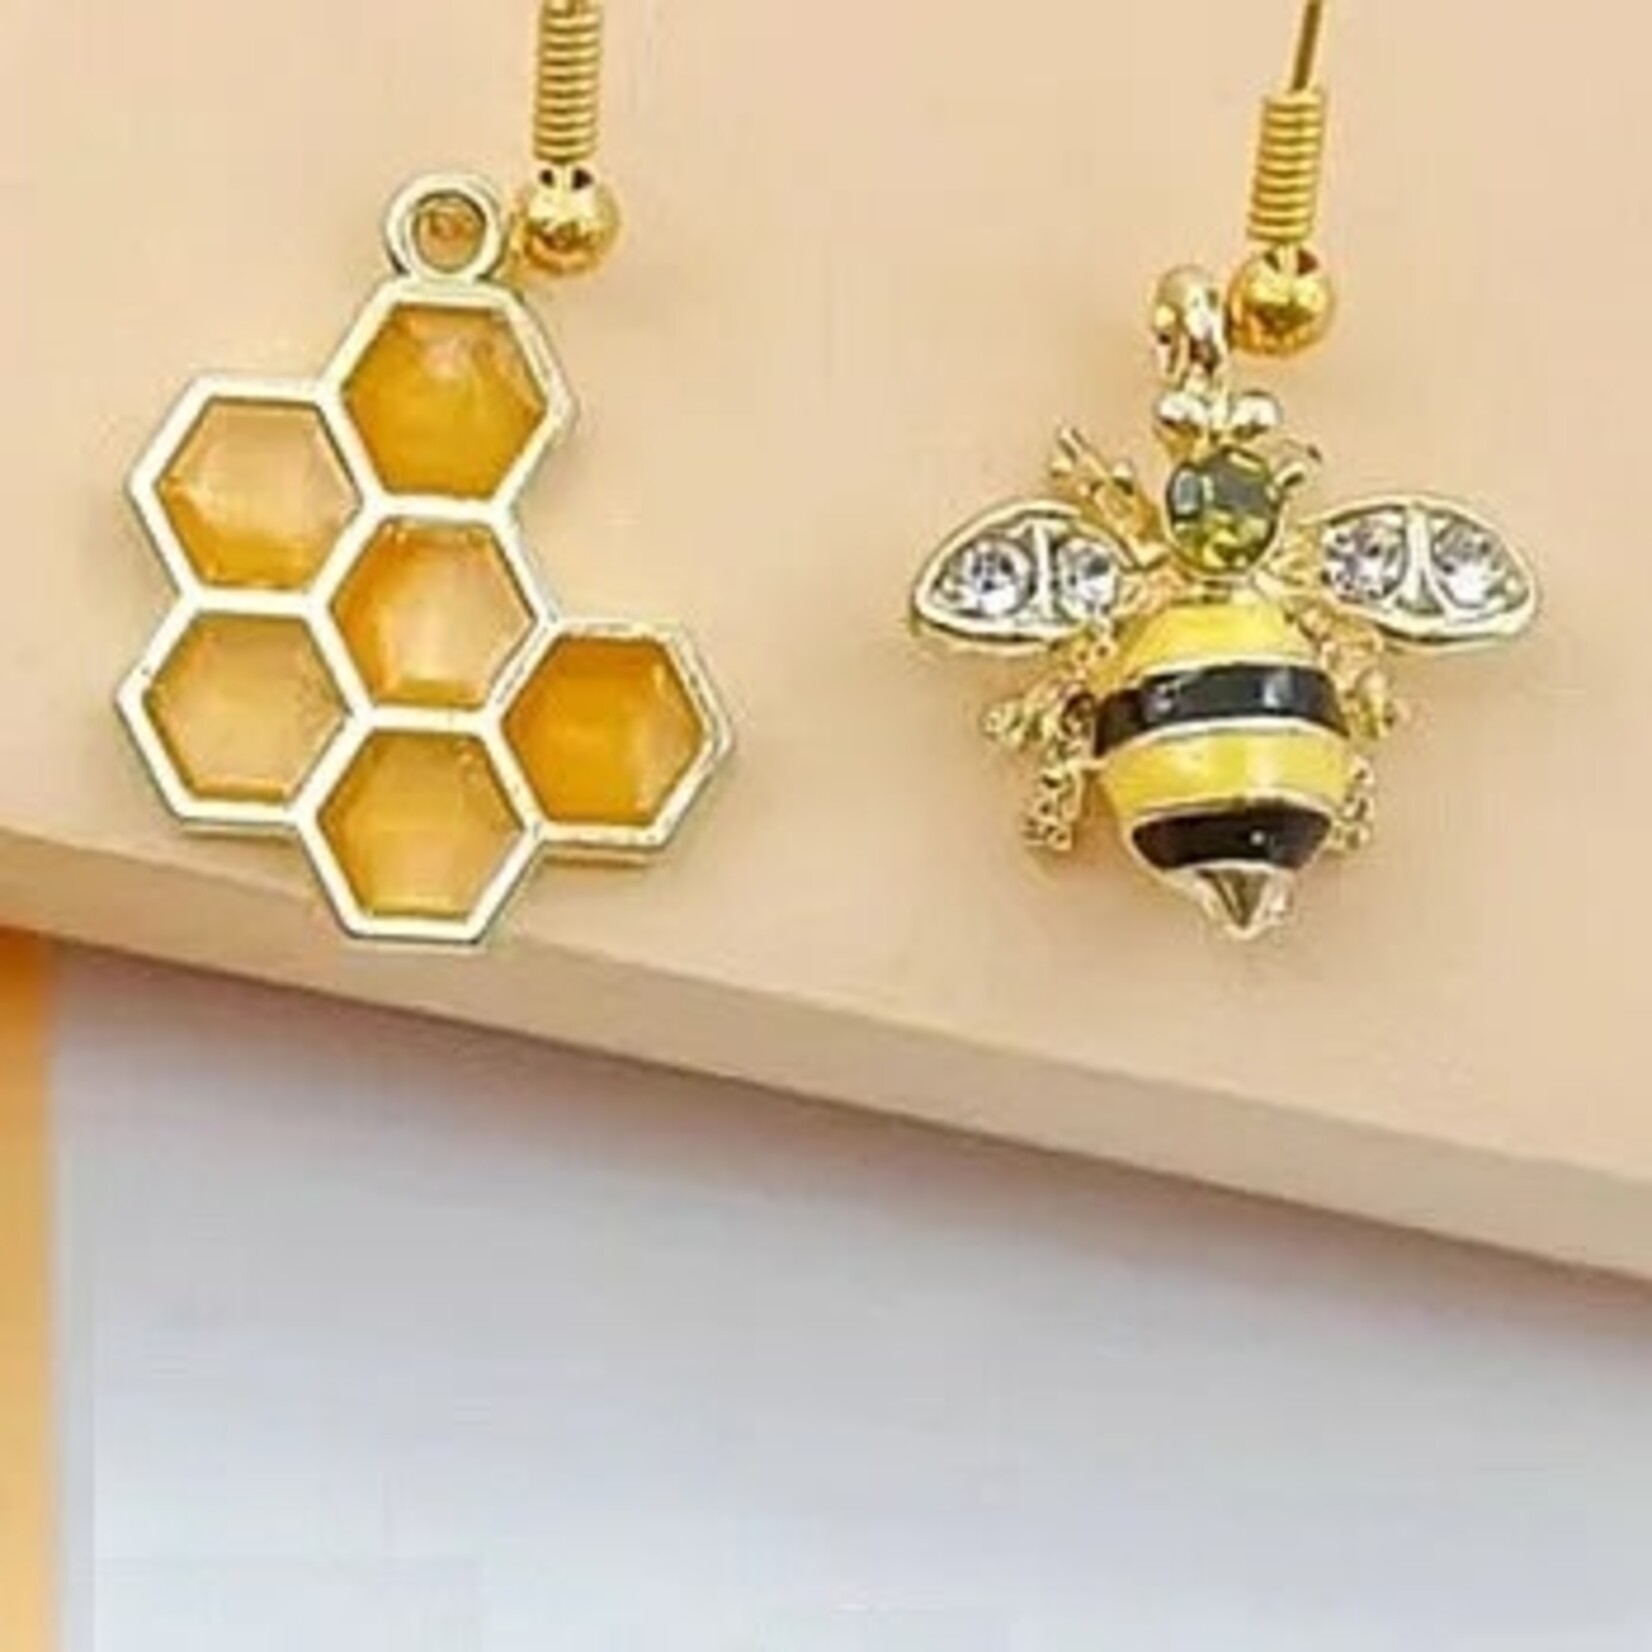 Honeycomb 21x17mm Gold Plated Enamel Charm